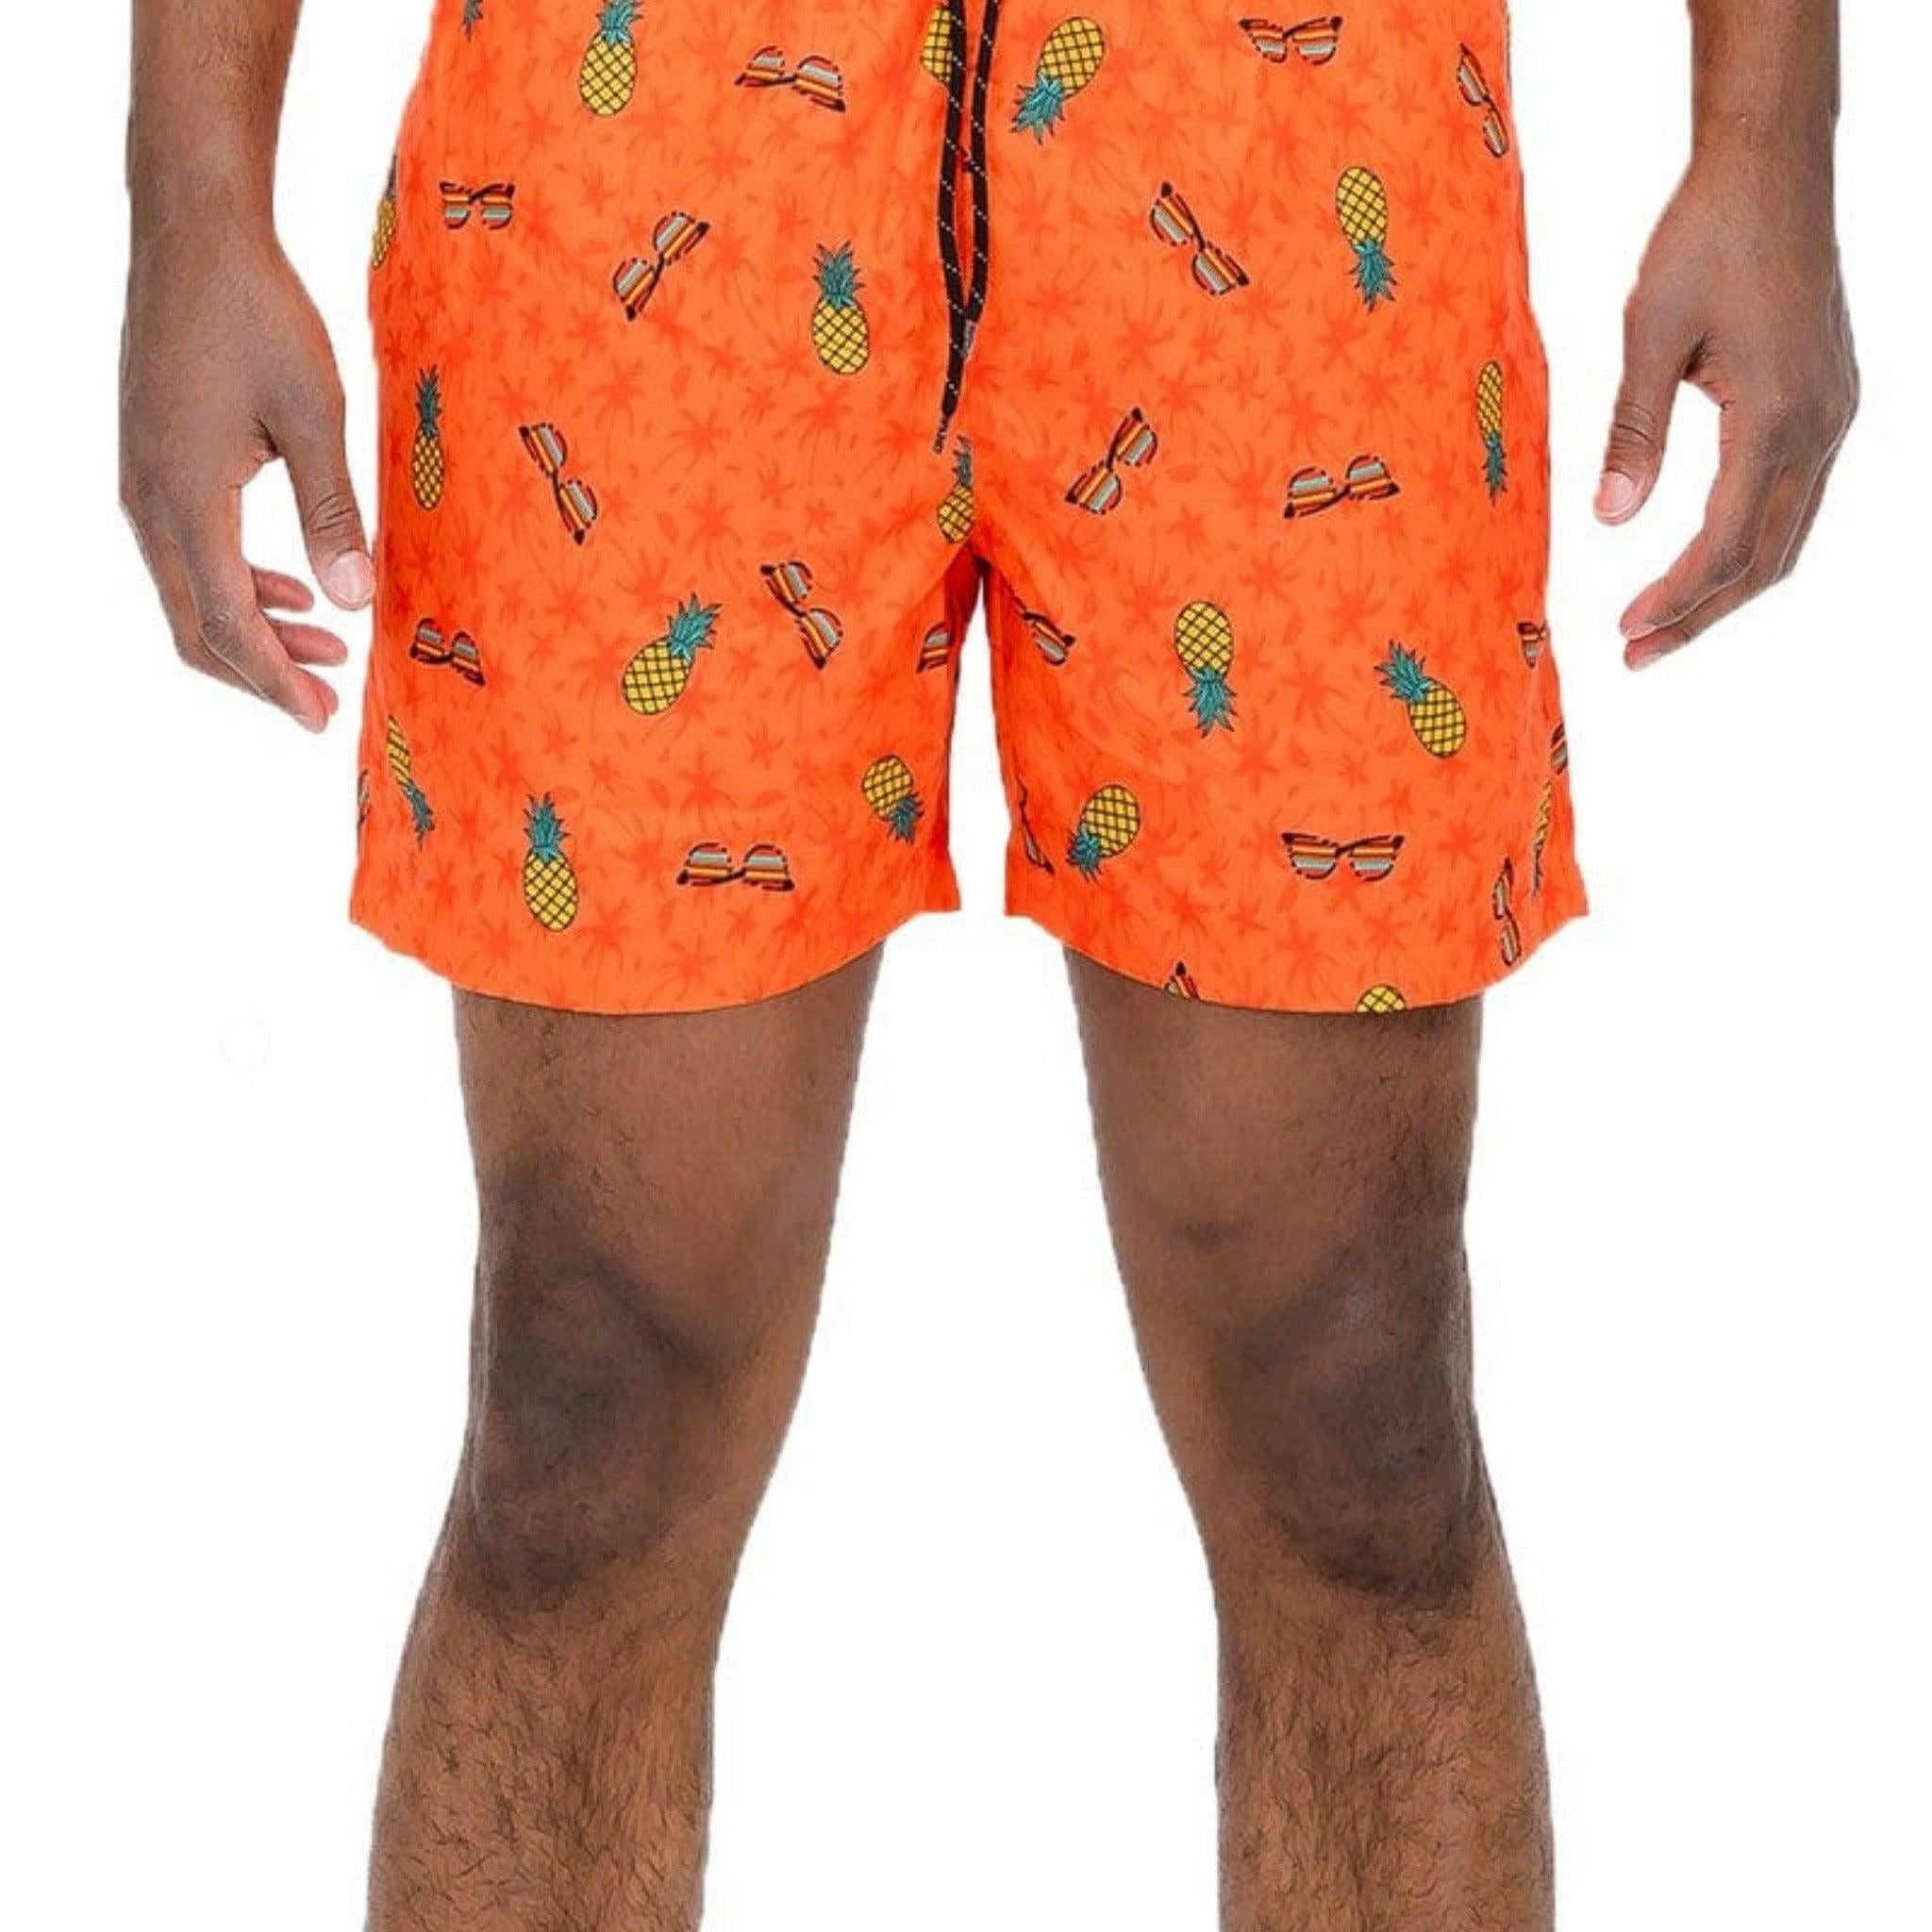 Epicplacess Swimwear Orange / MEDIUM / UNITED STATES Pineapple Brief Tropical Print Swimwear